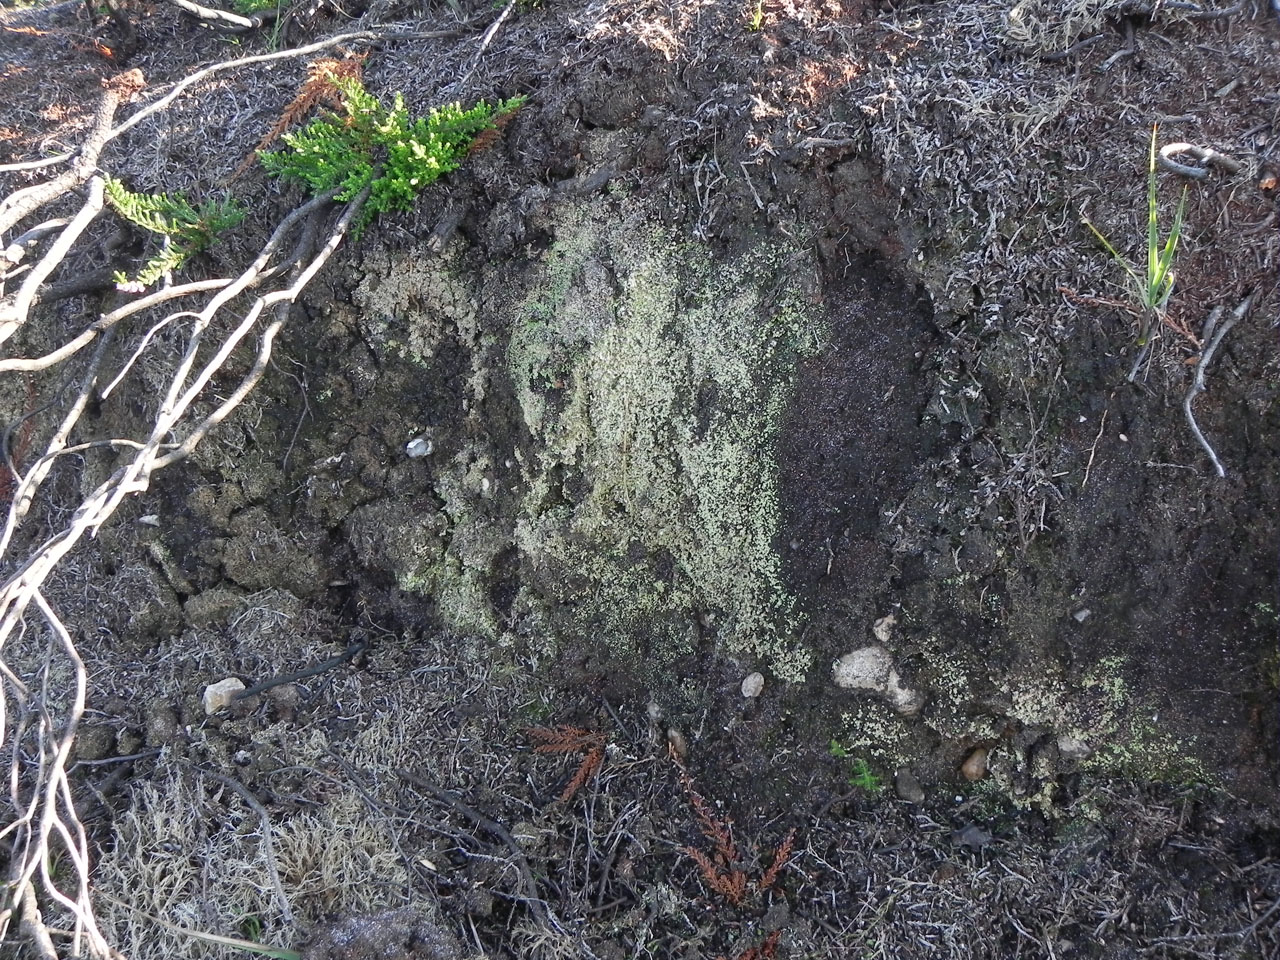 Cladonia incrassata habitat, eroded bank, heathland, fire